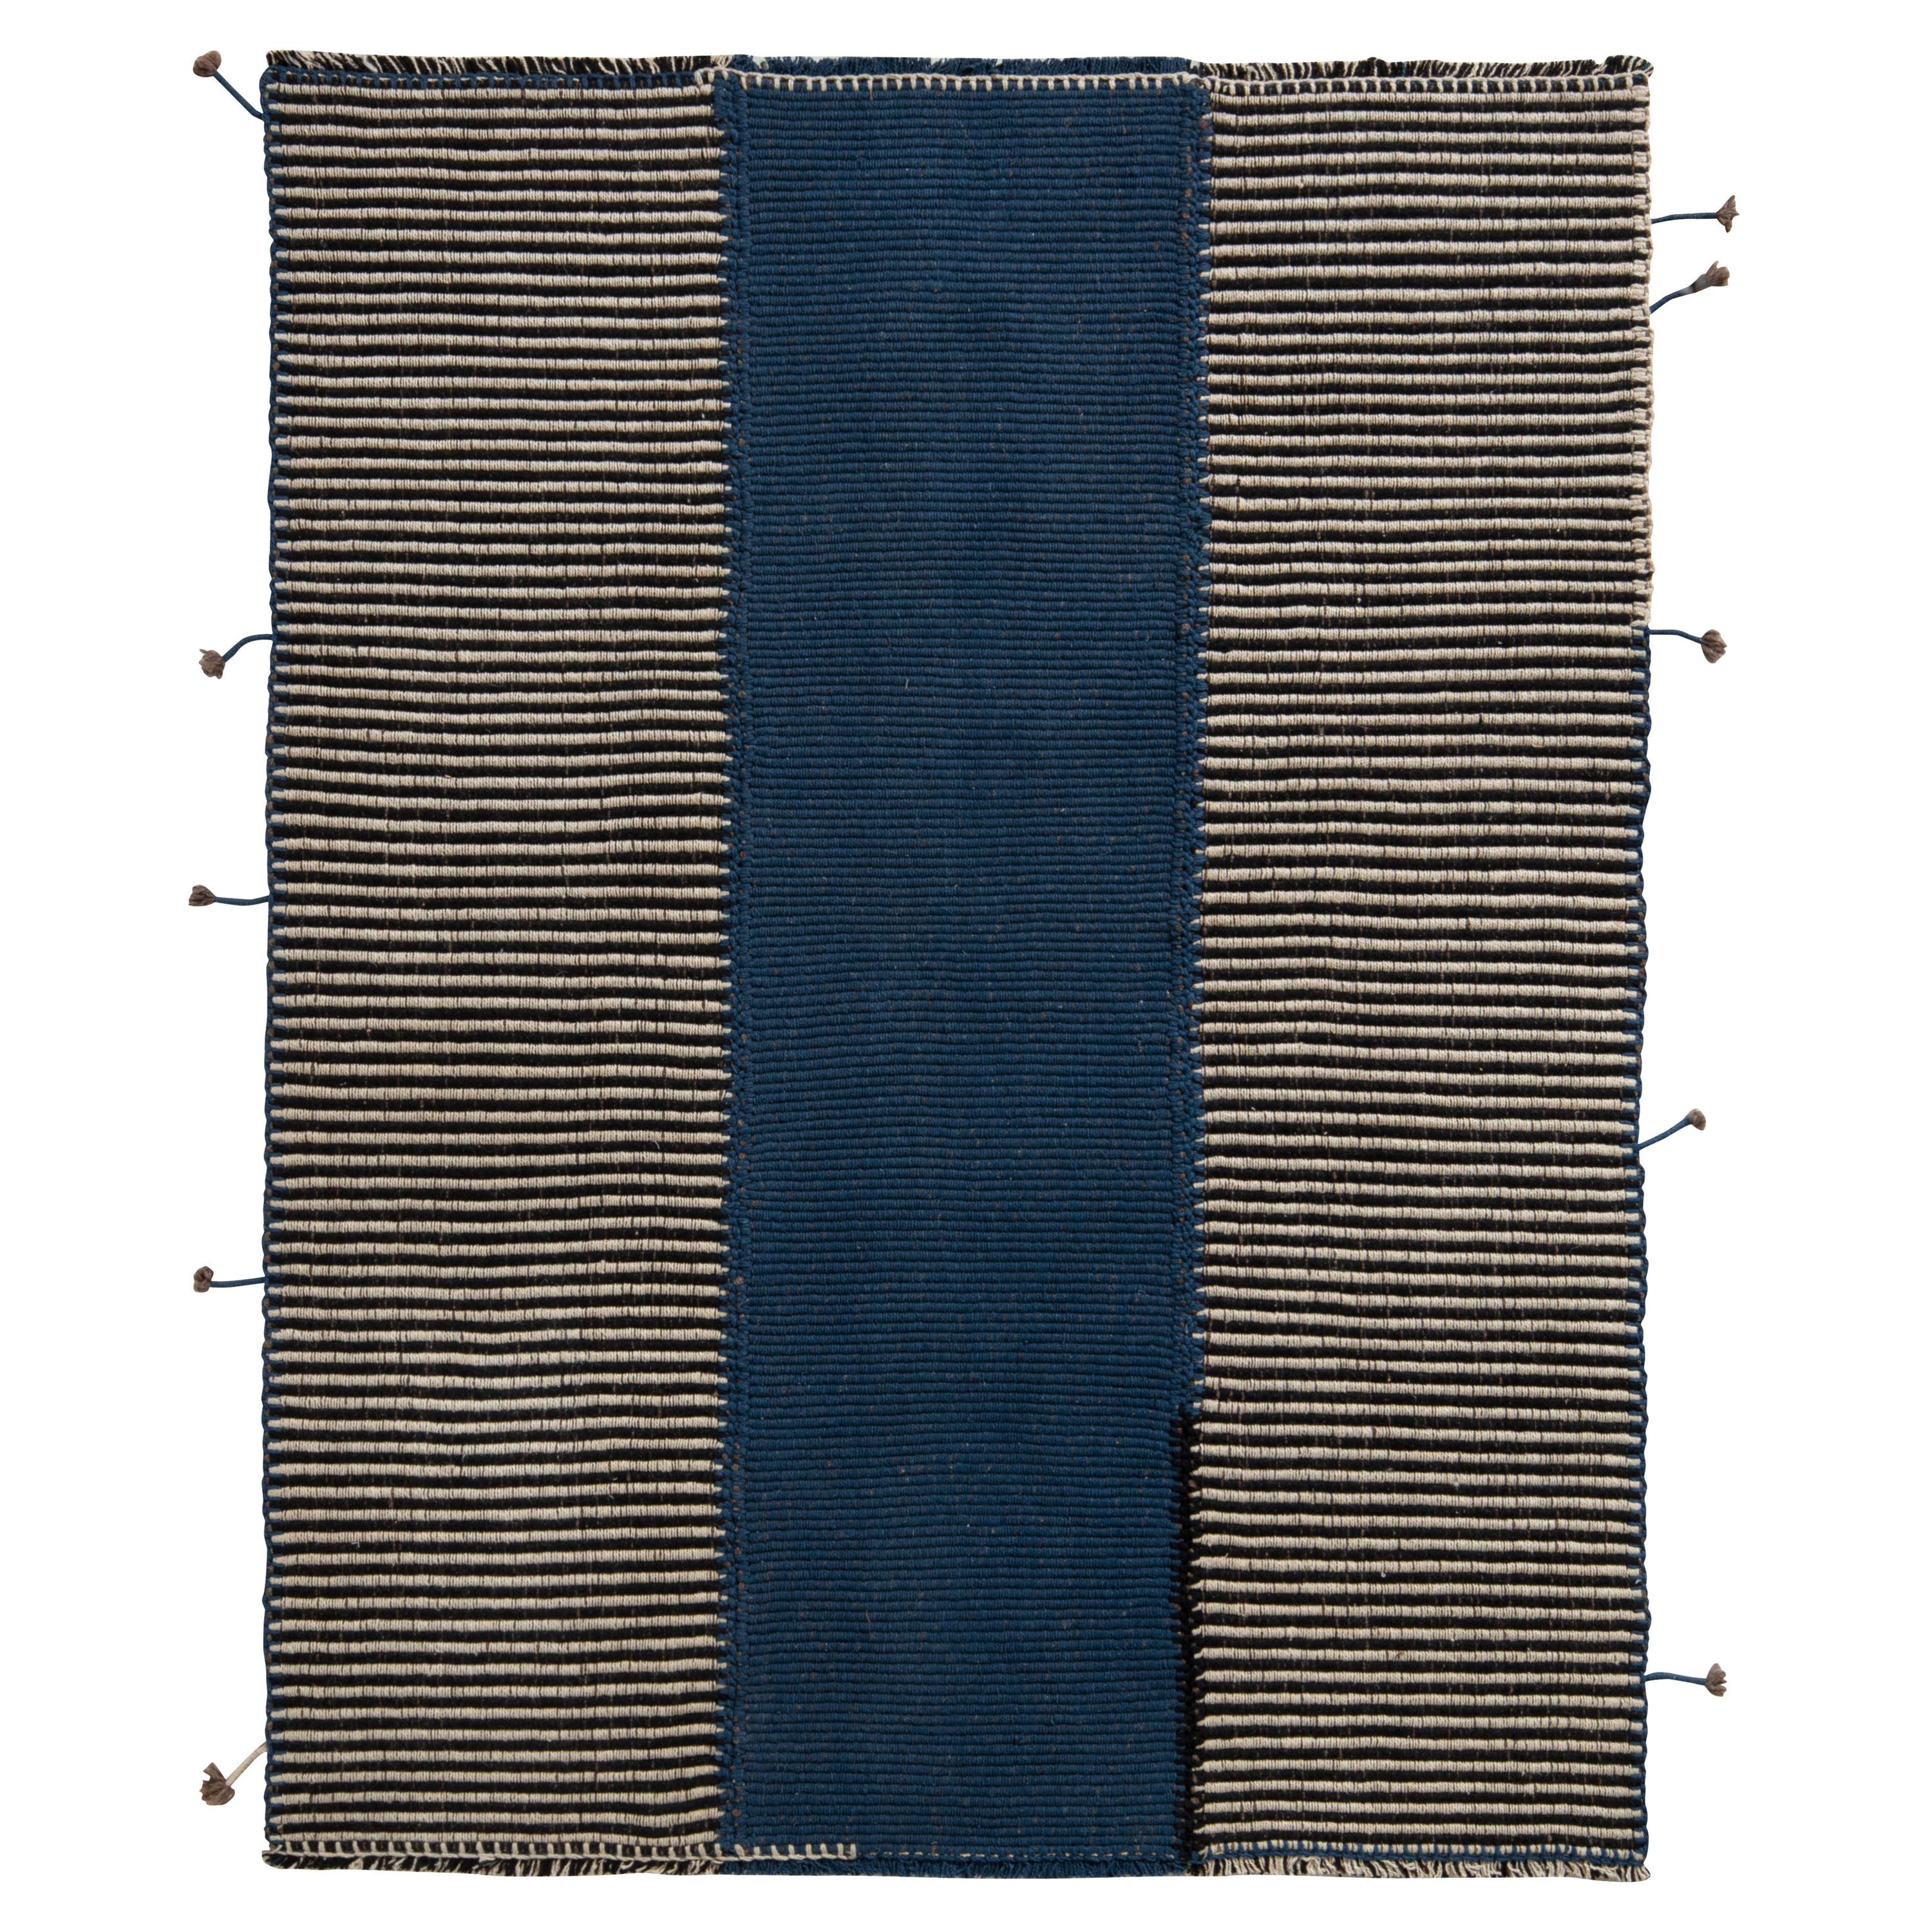 Rug & Kilim’s Modern Paneled Kilim Rug in Blue and Brown Stripe Pattern